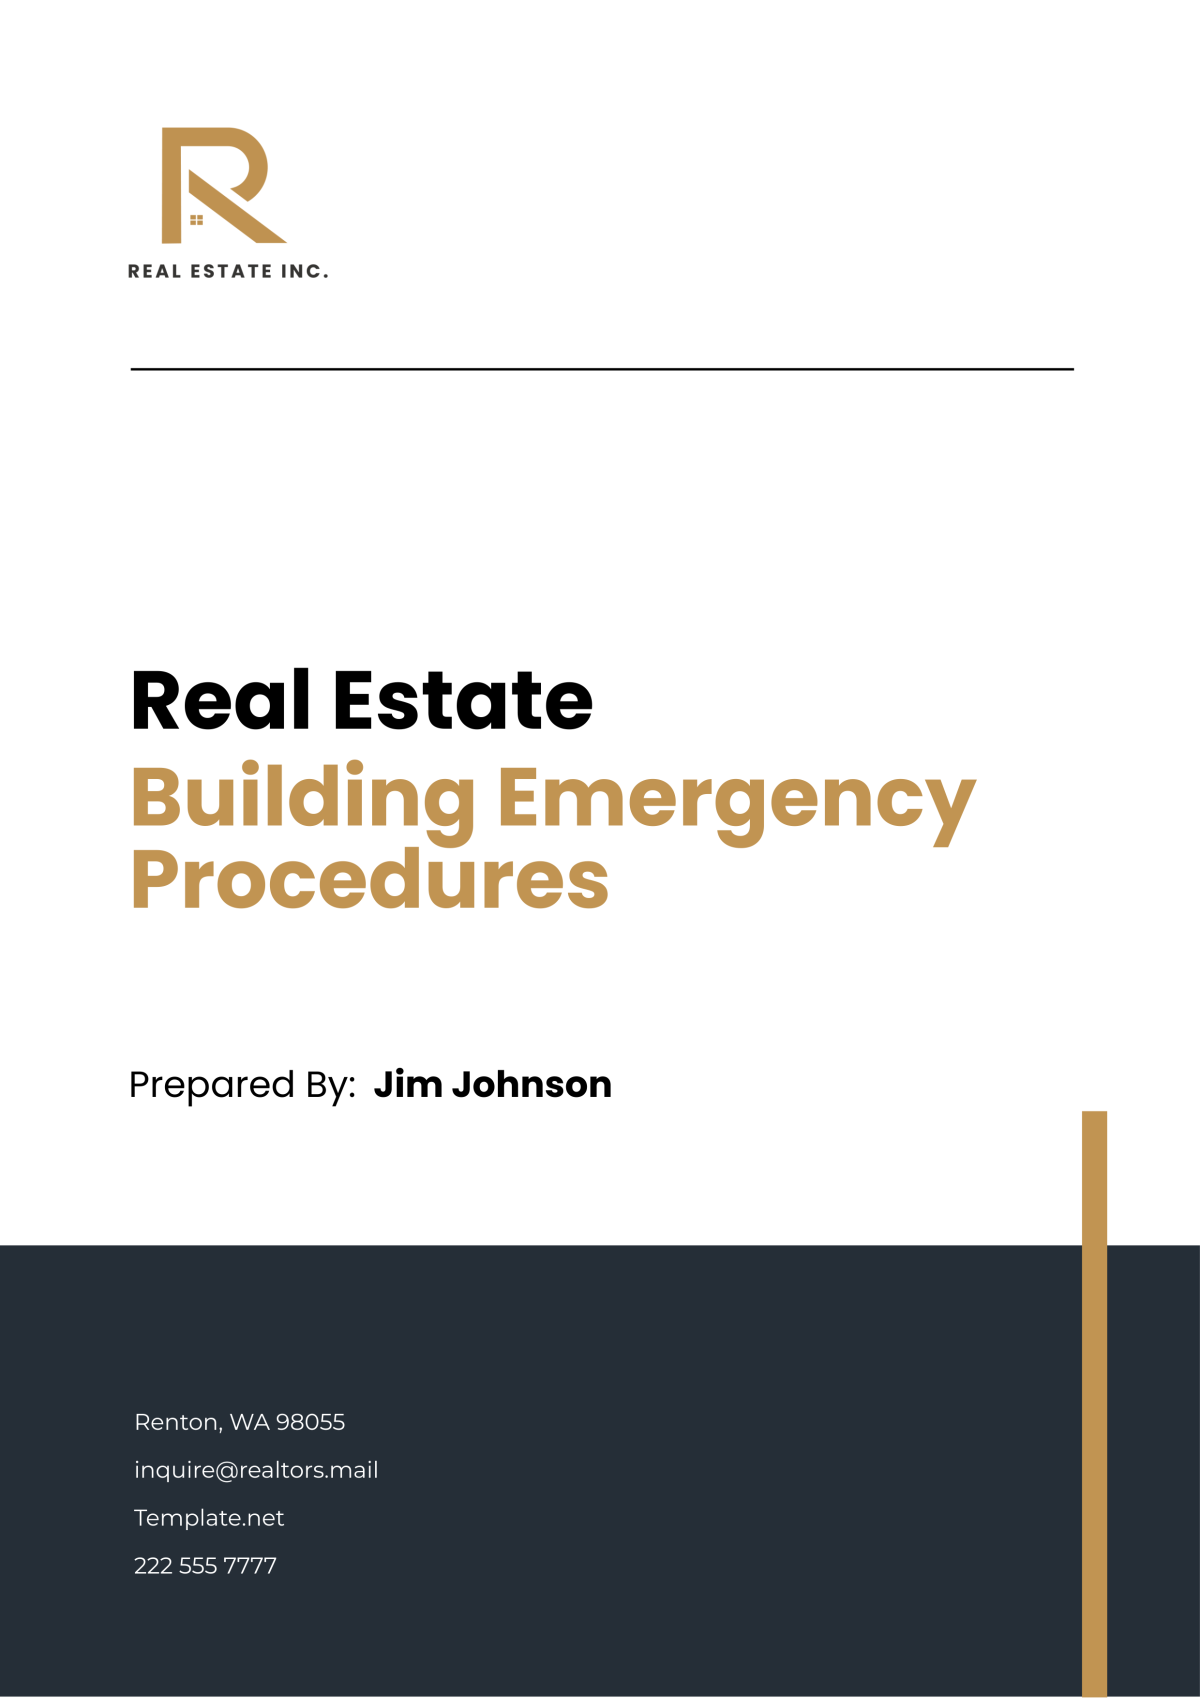 Real Estate Building Emergency Procedures Template